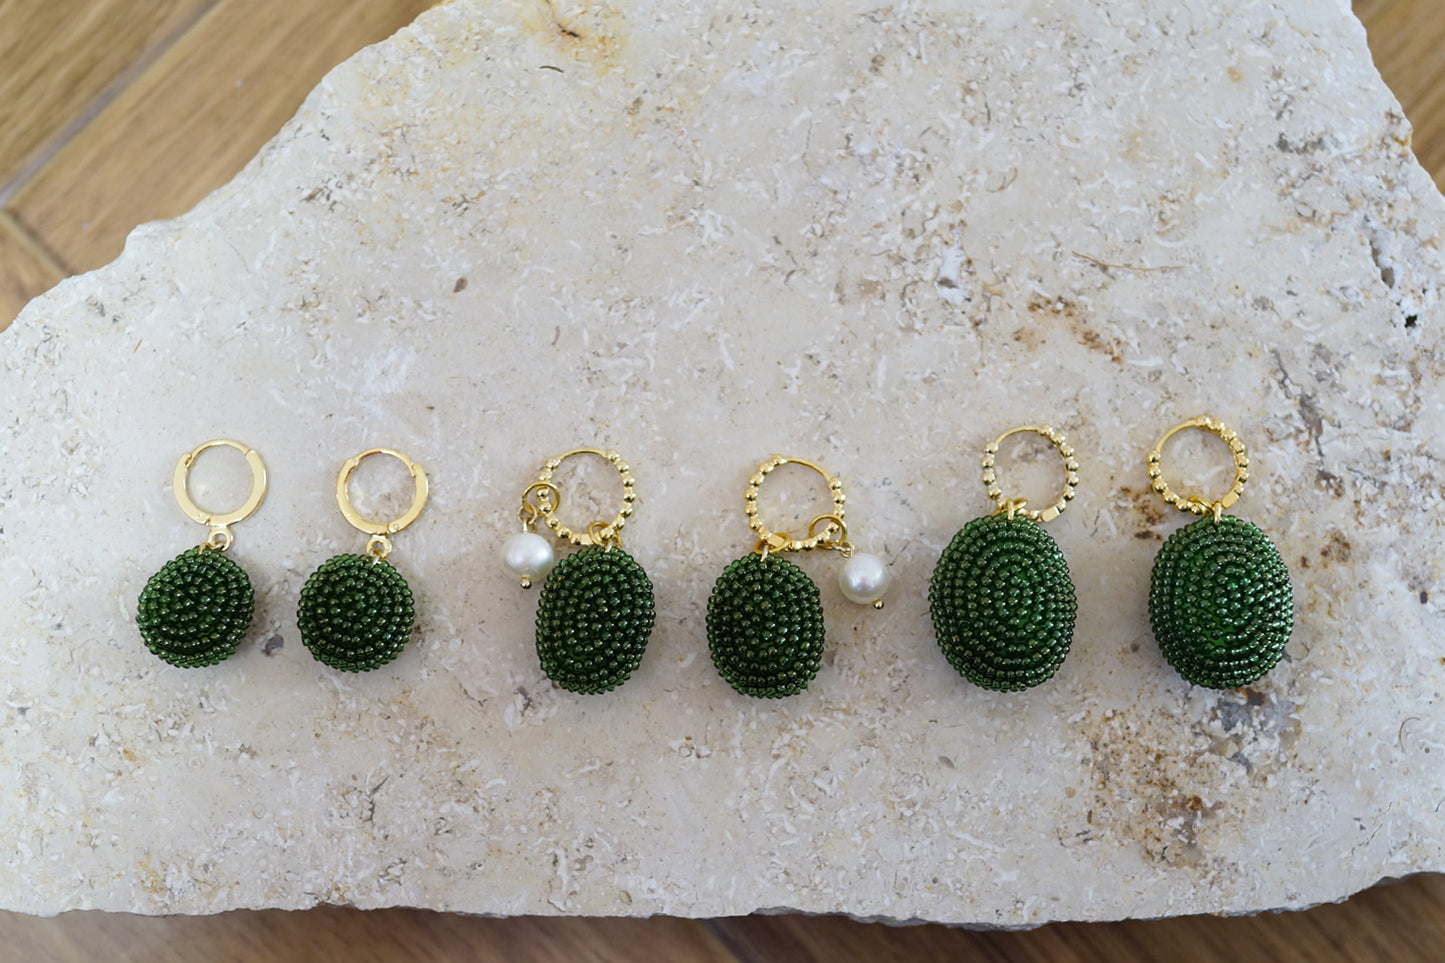 Olive seed-Green+Pearl Earrings